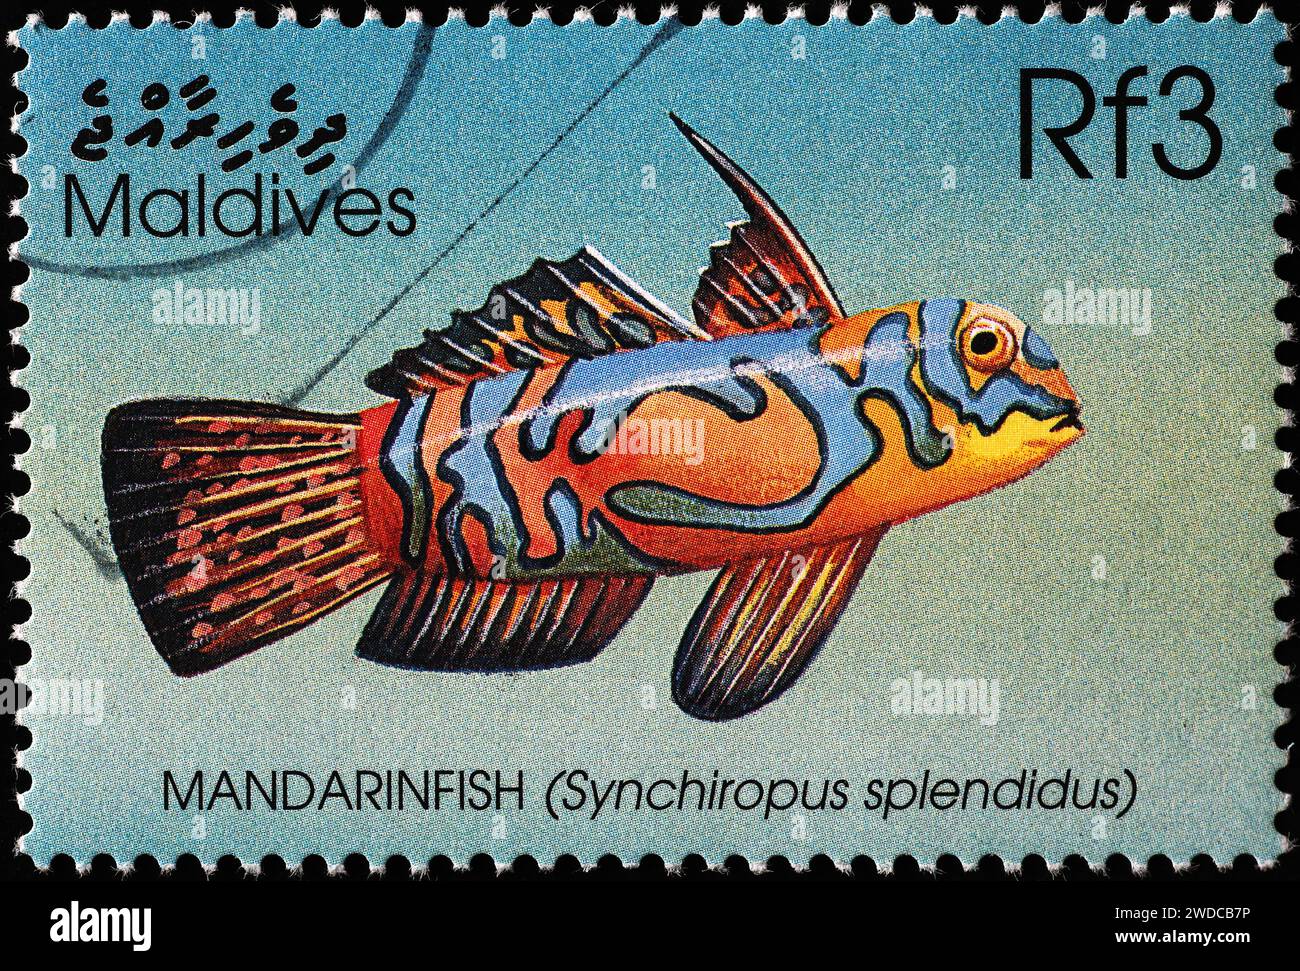 Mandarinfish on postage stamp from Maldives Stock Photo